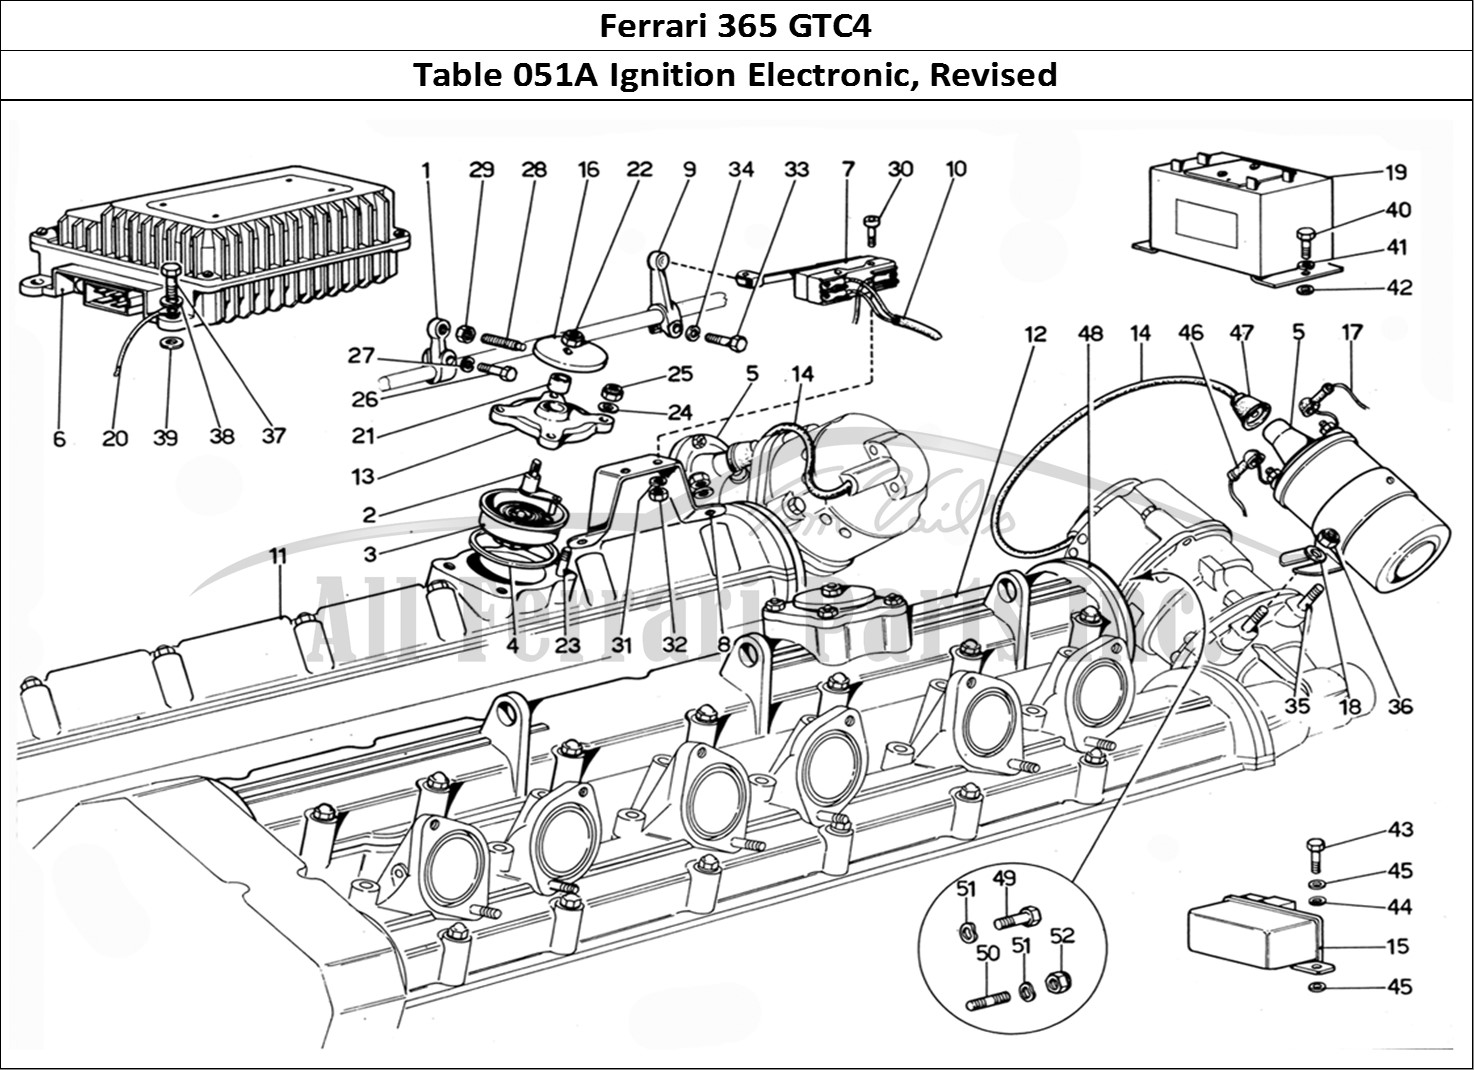 Ferrari Parts Ferrari 365 GTC4 (Mechanical) Page 051 Electronic ignition - Rev